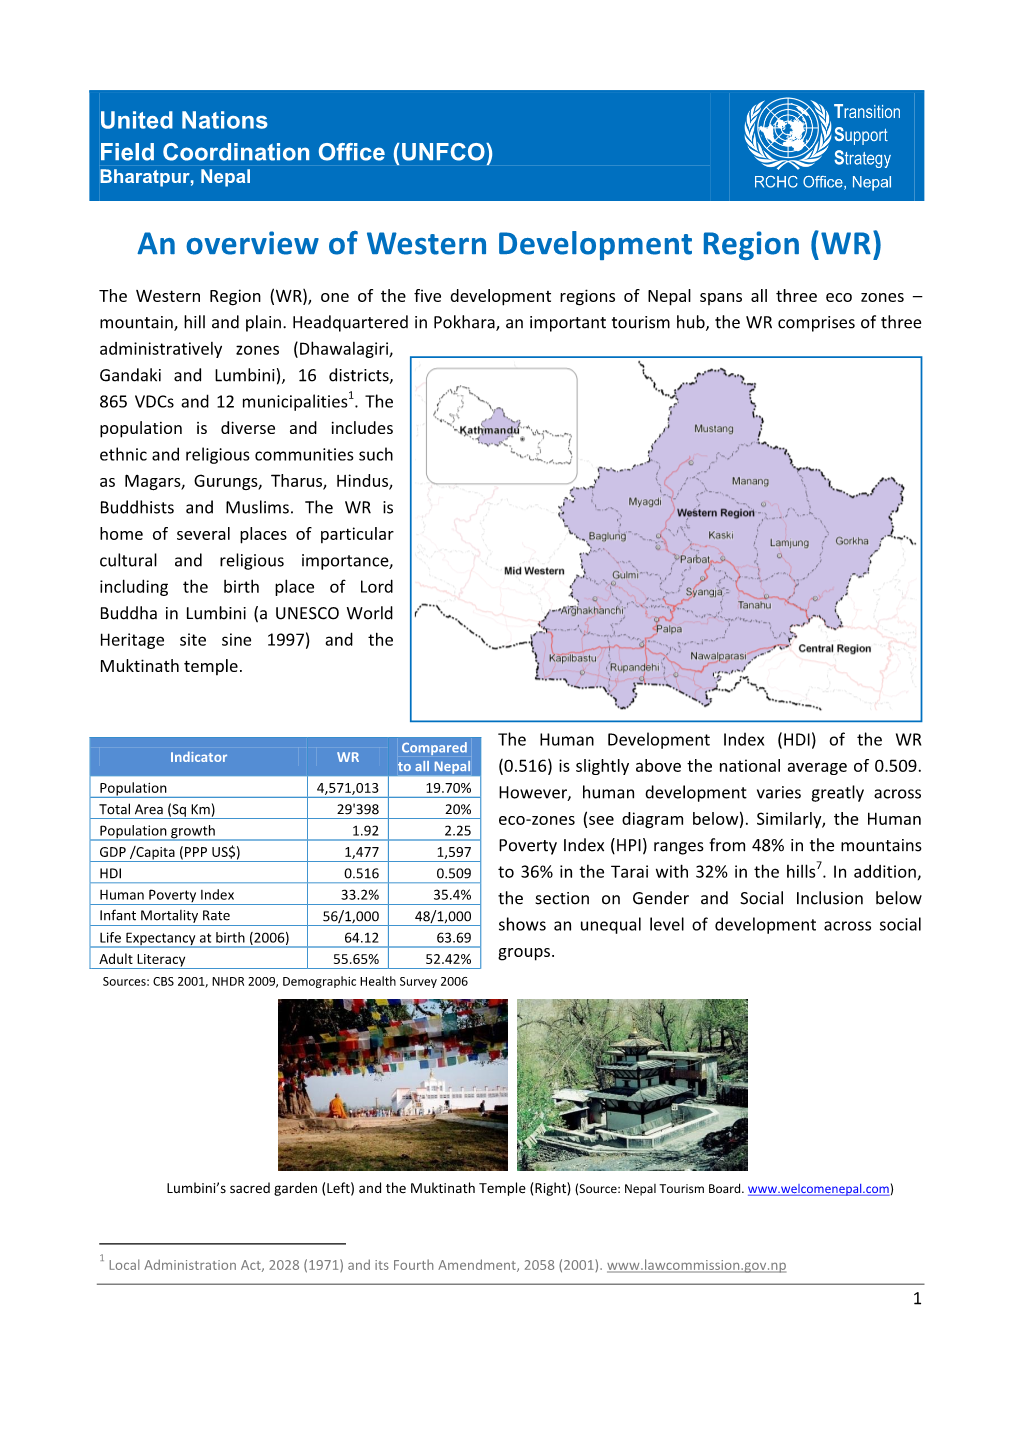 An Overview of Western Development Region (WR)